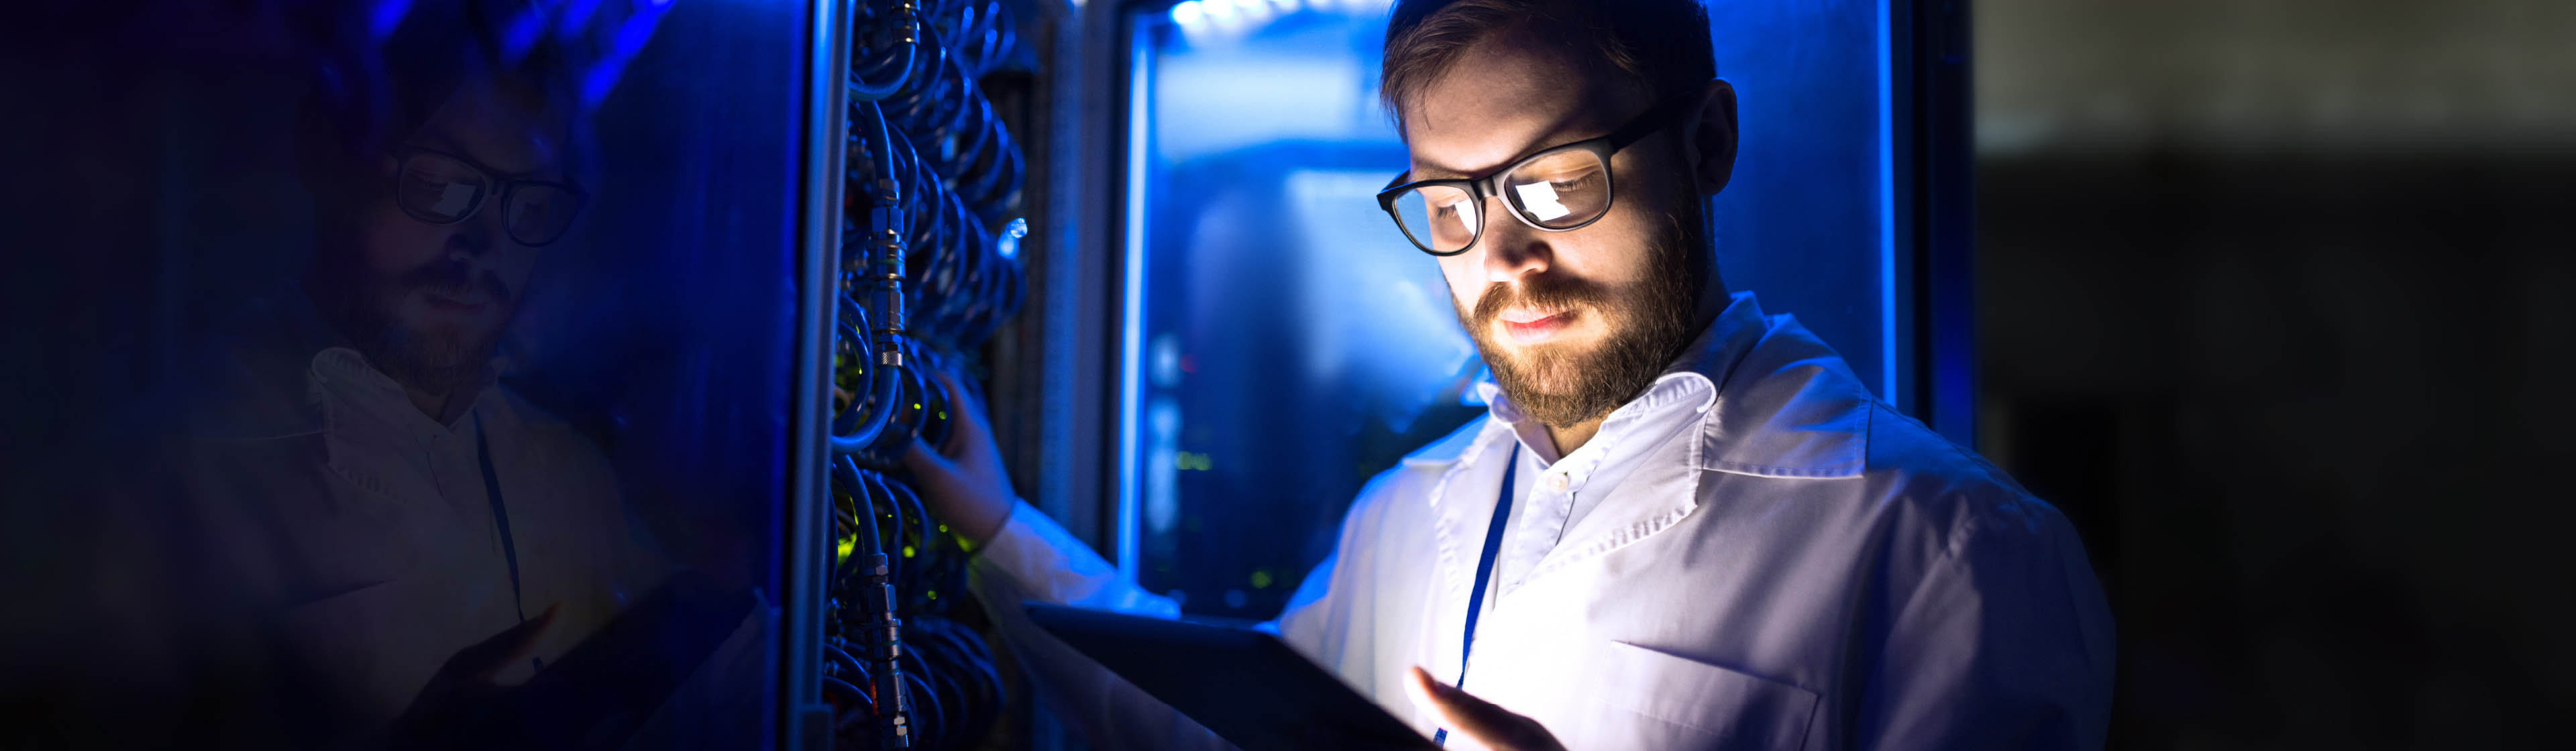 A cloud technician wearing glasses adjusting a server 